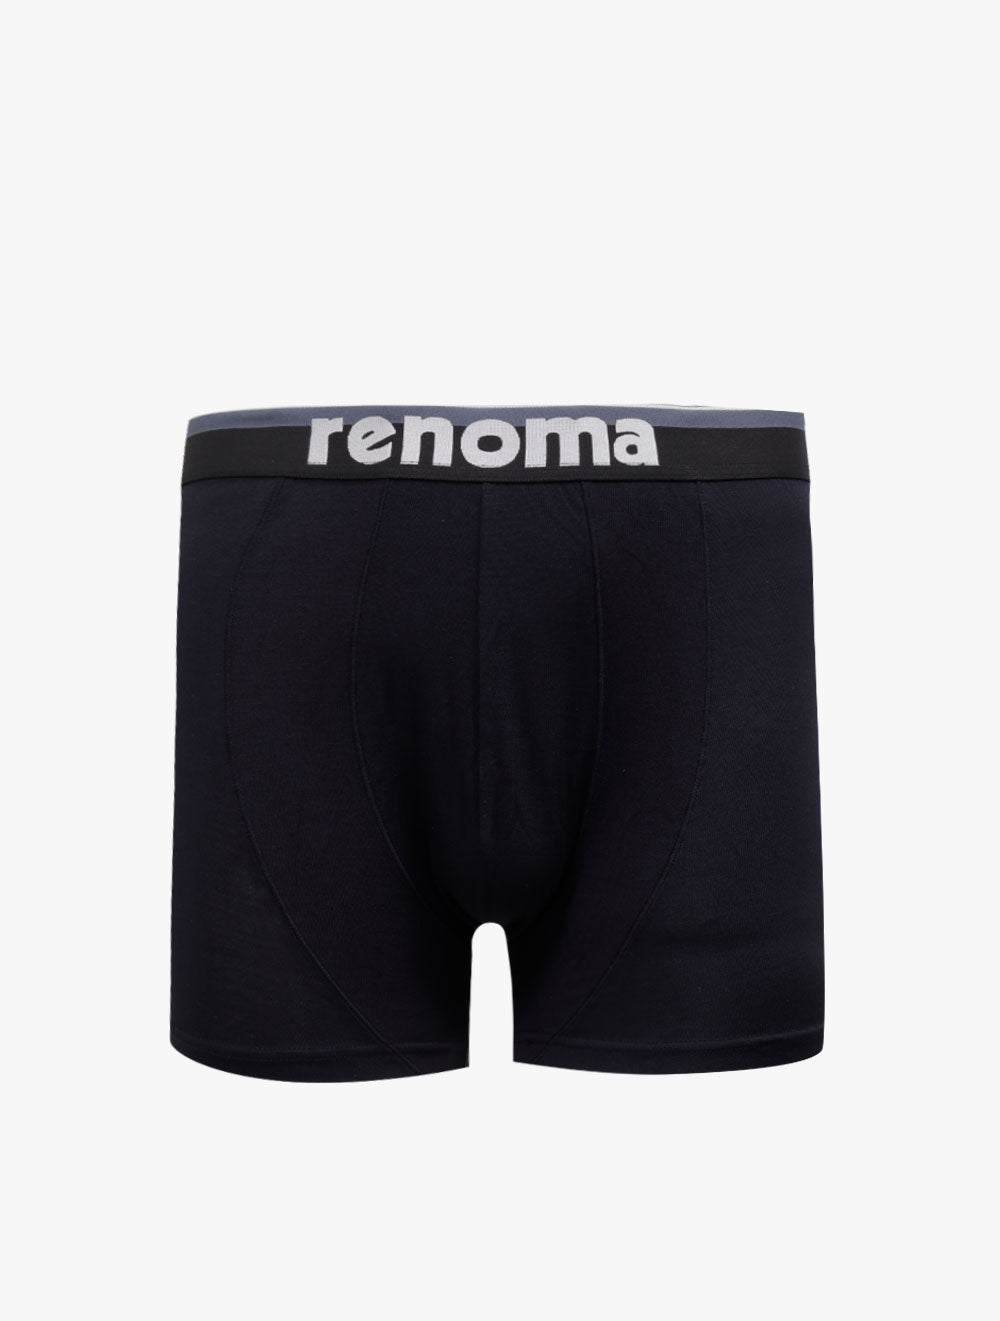 RENOMA
New Ultra Soft Trunk Brief 1in1 - 8041